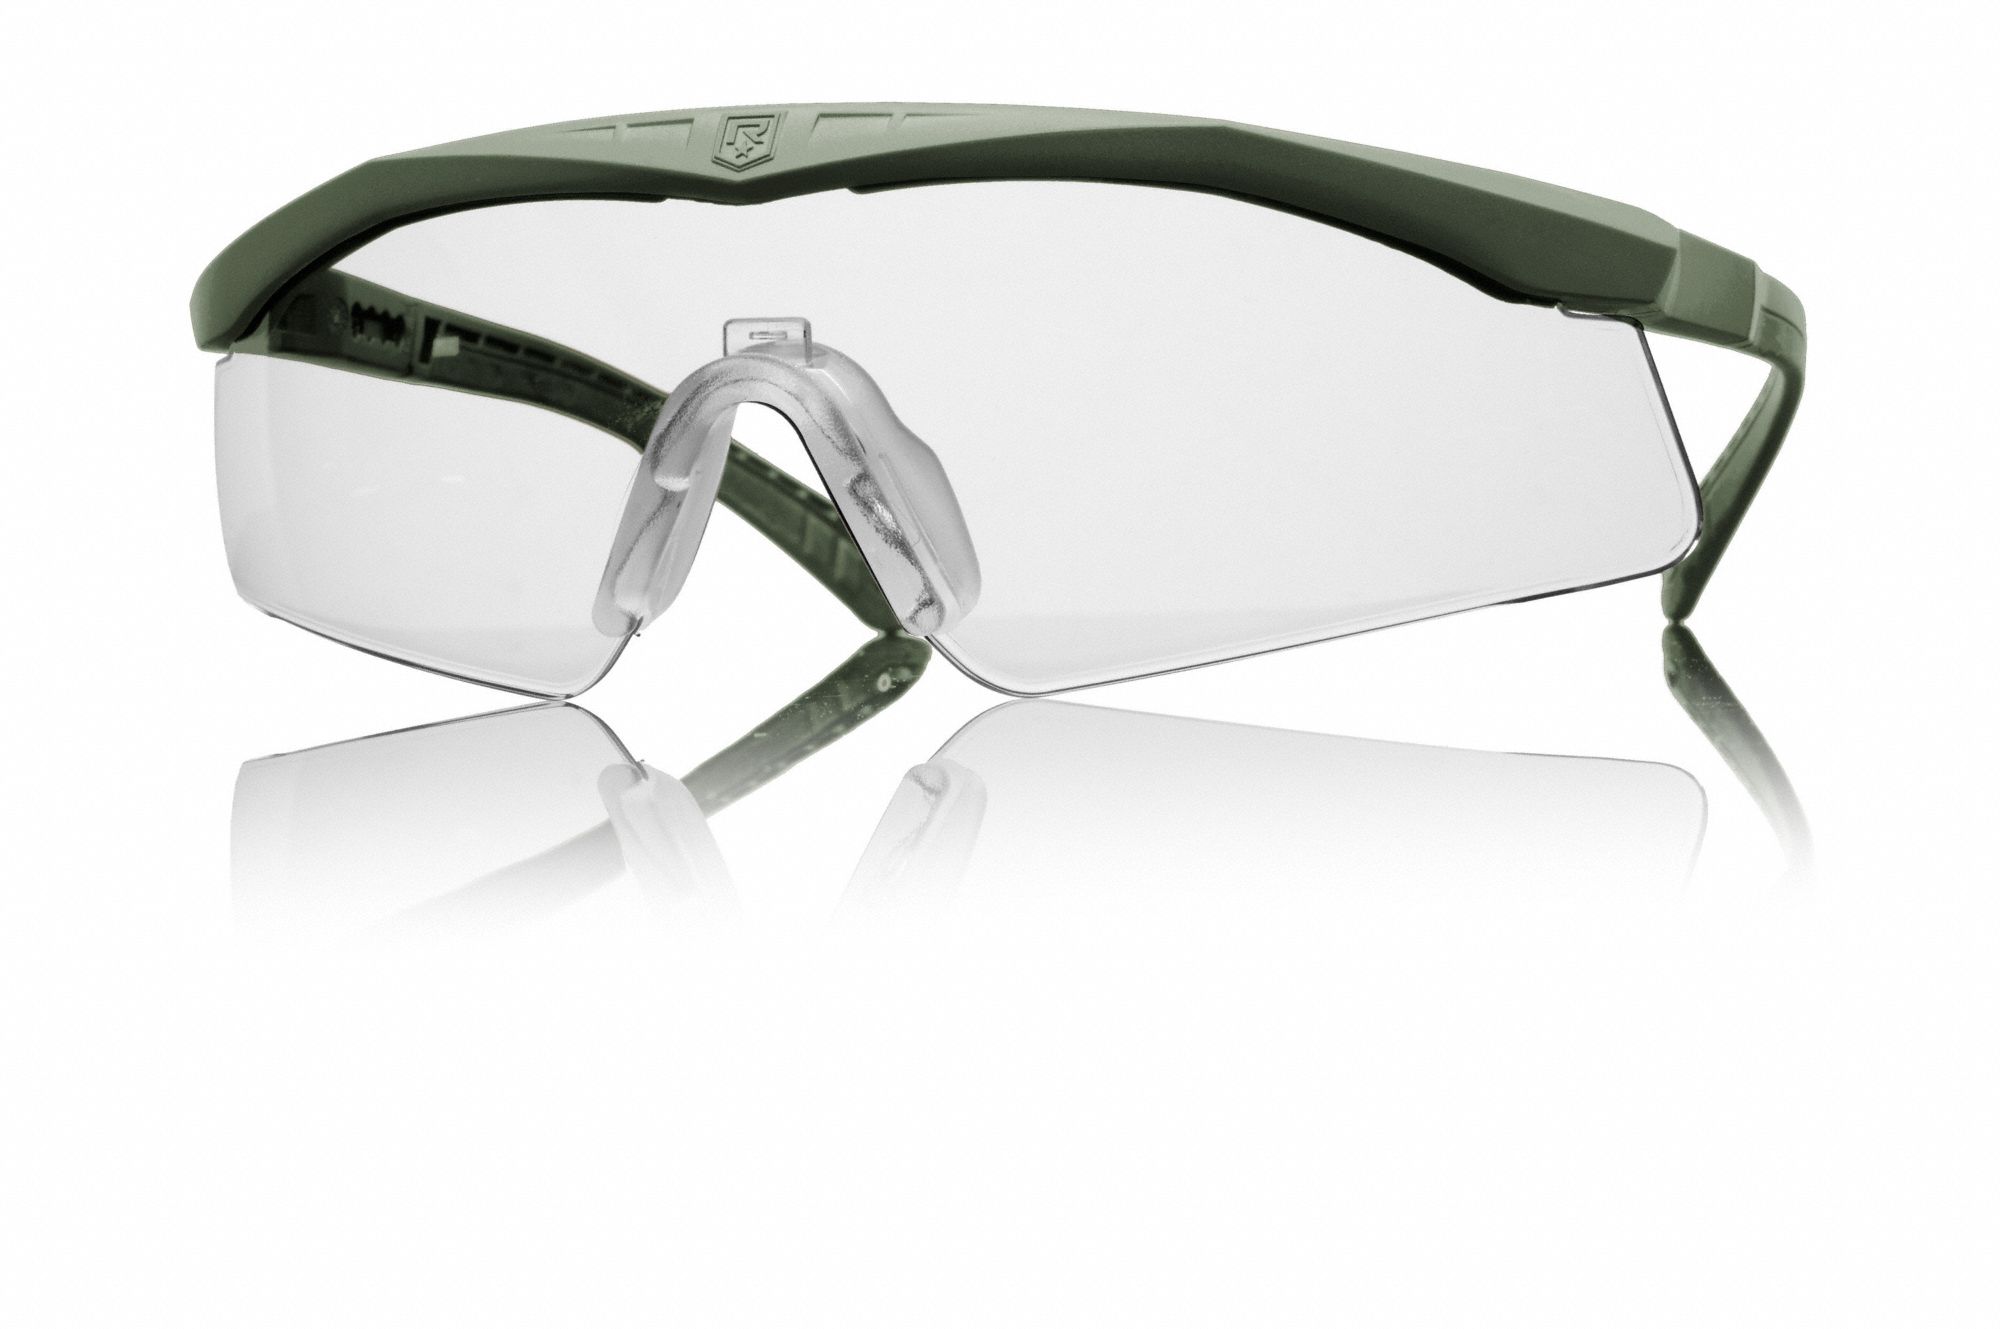 Revision Military Safety Glasses Assorted 38rl61 4 0076 0151 Grainger